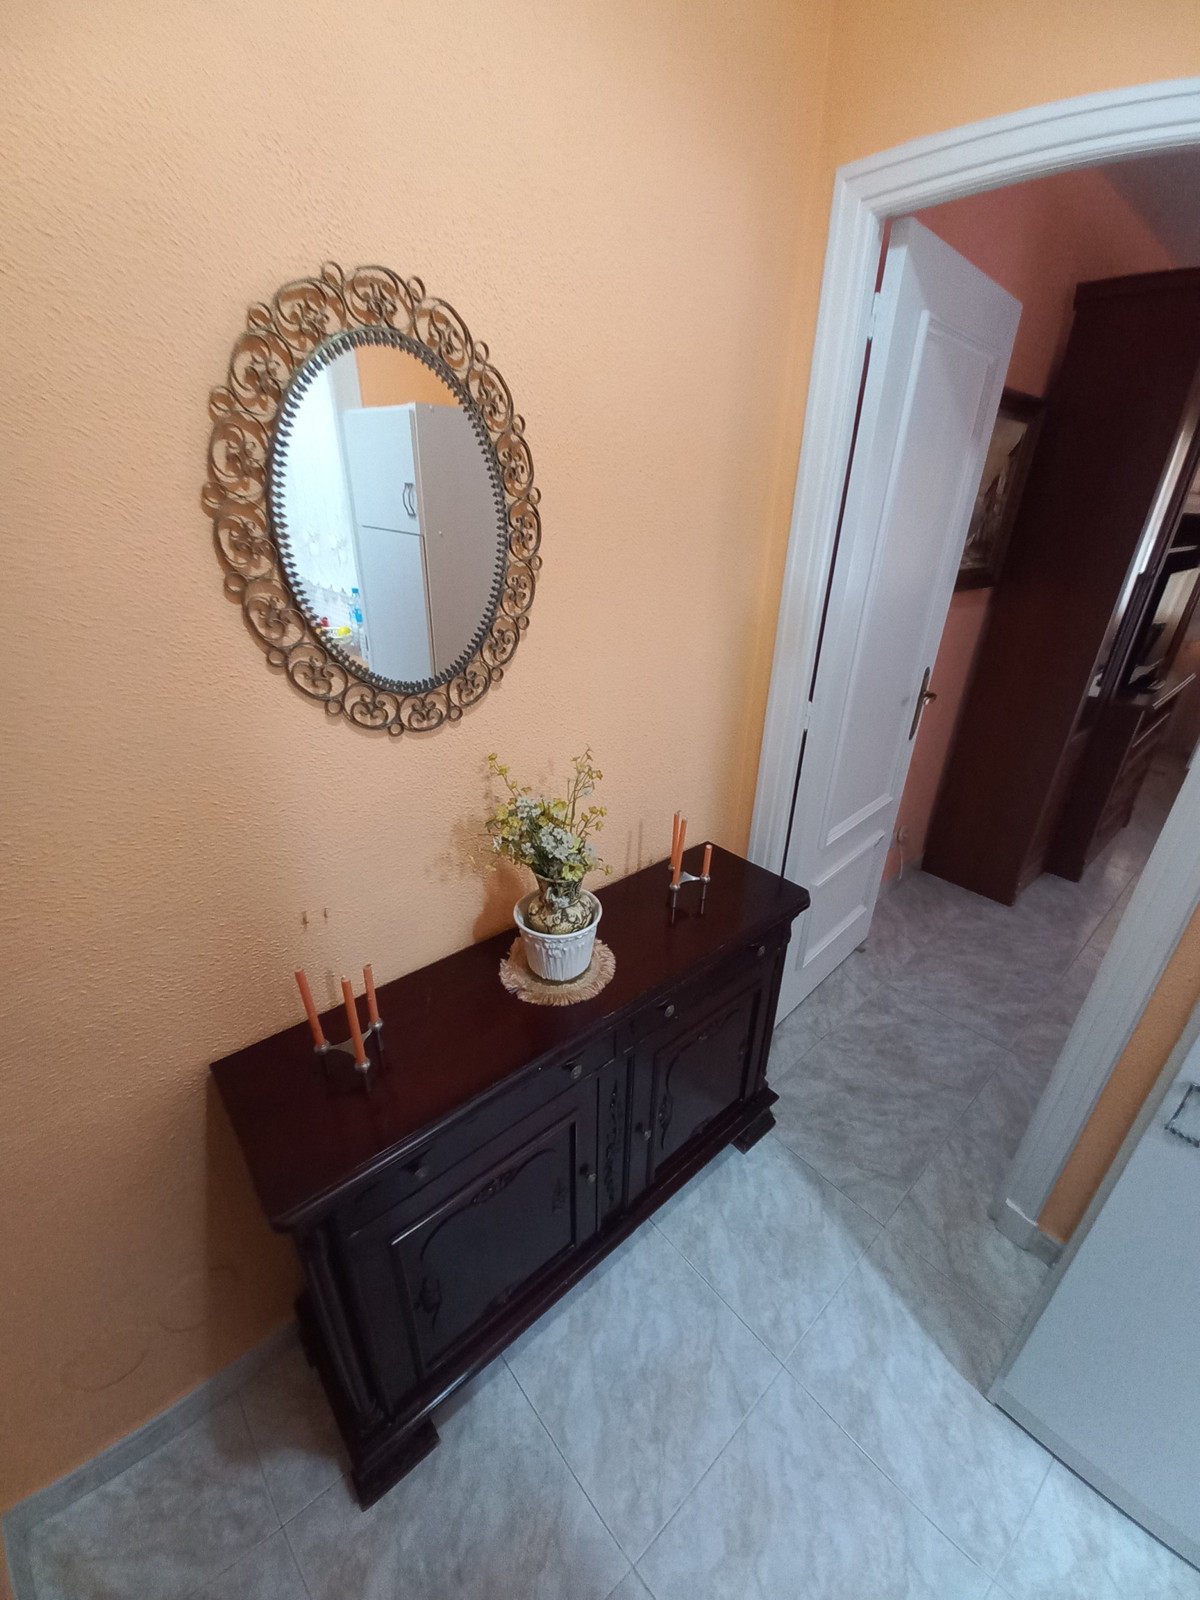 2 bedroom Apartment For Sale in La Campana, Málaga - thumb 14